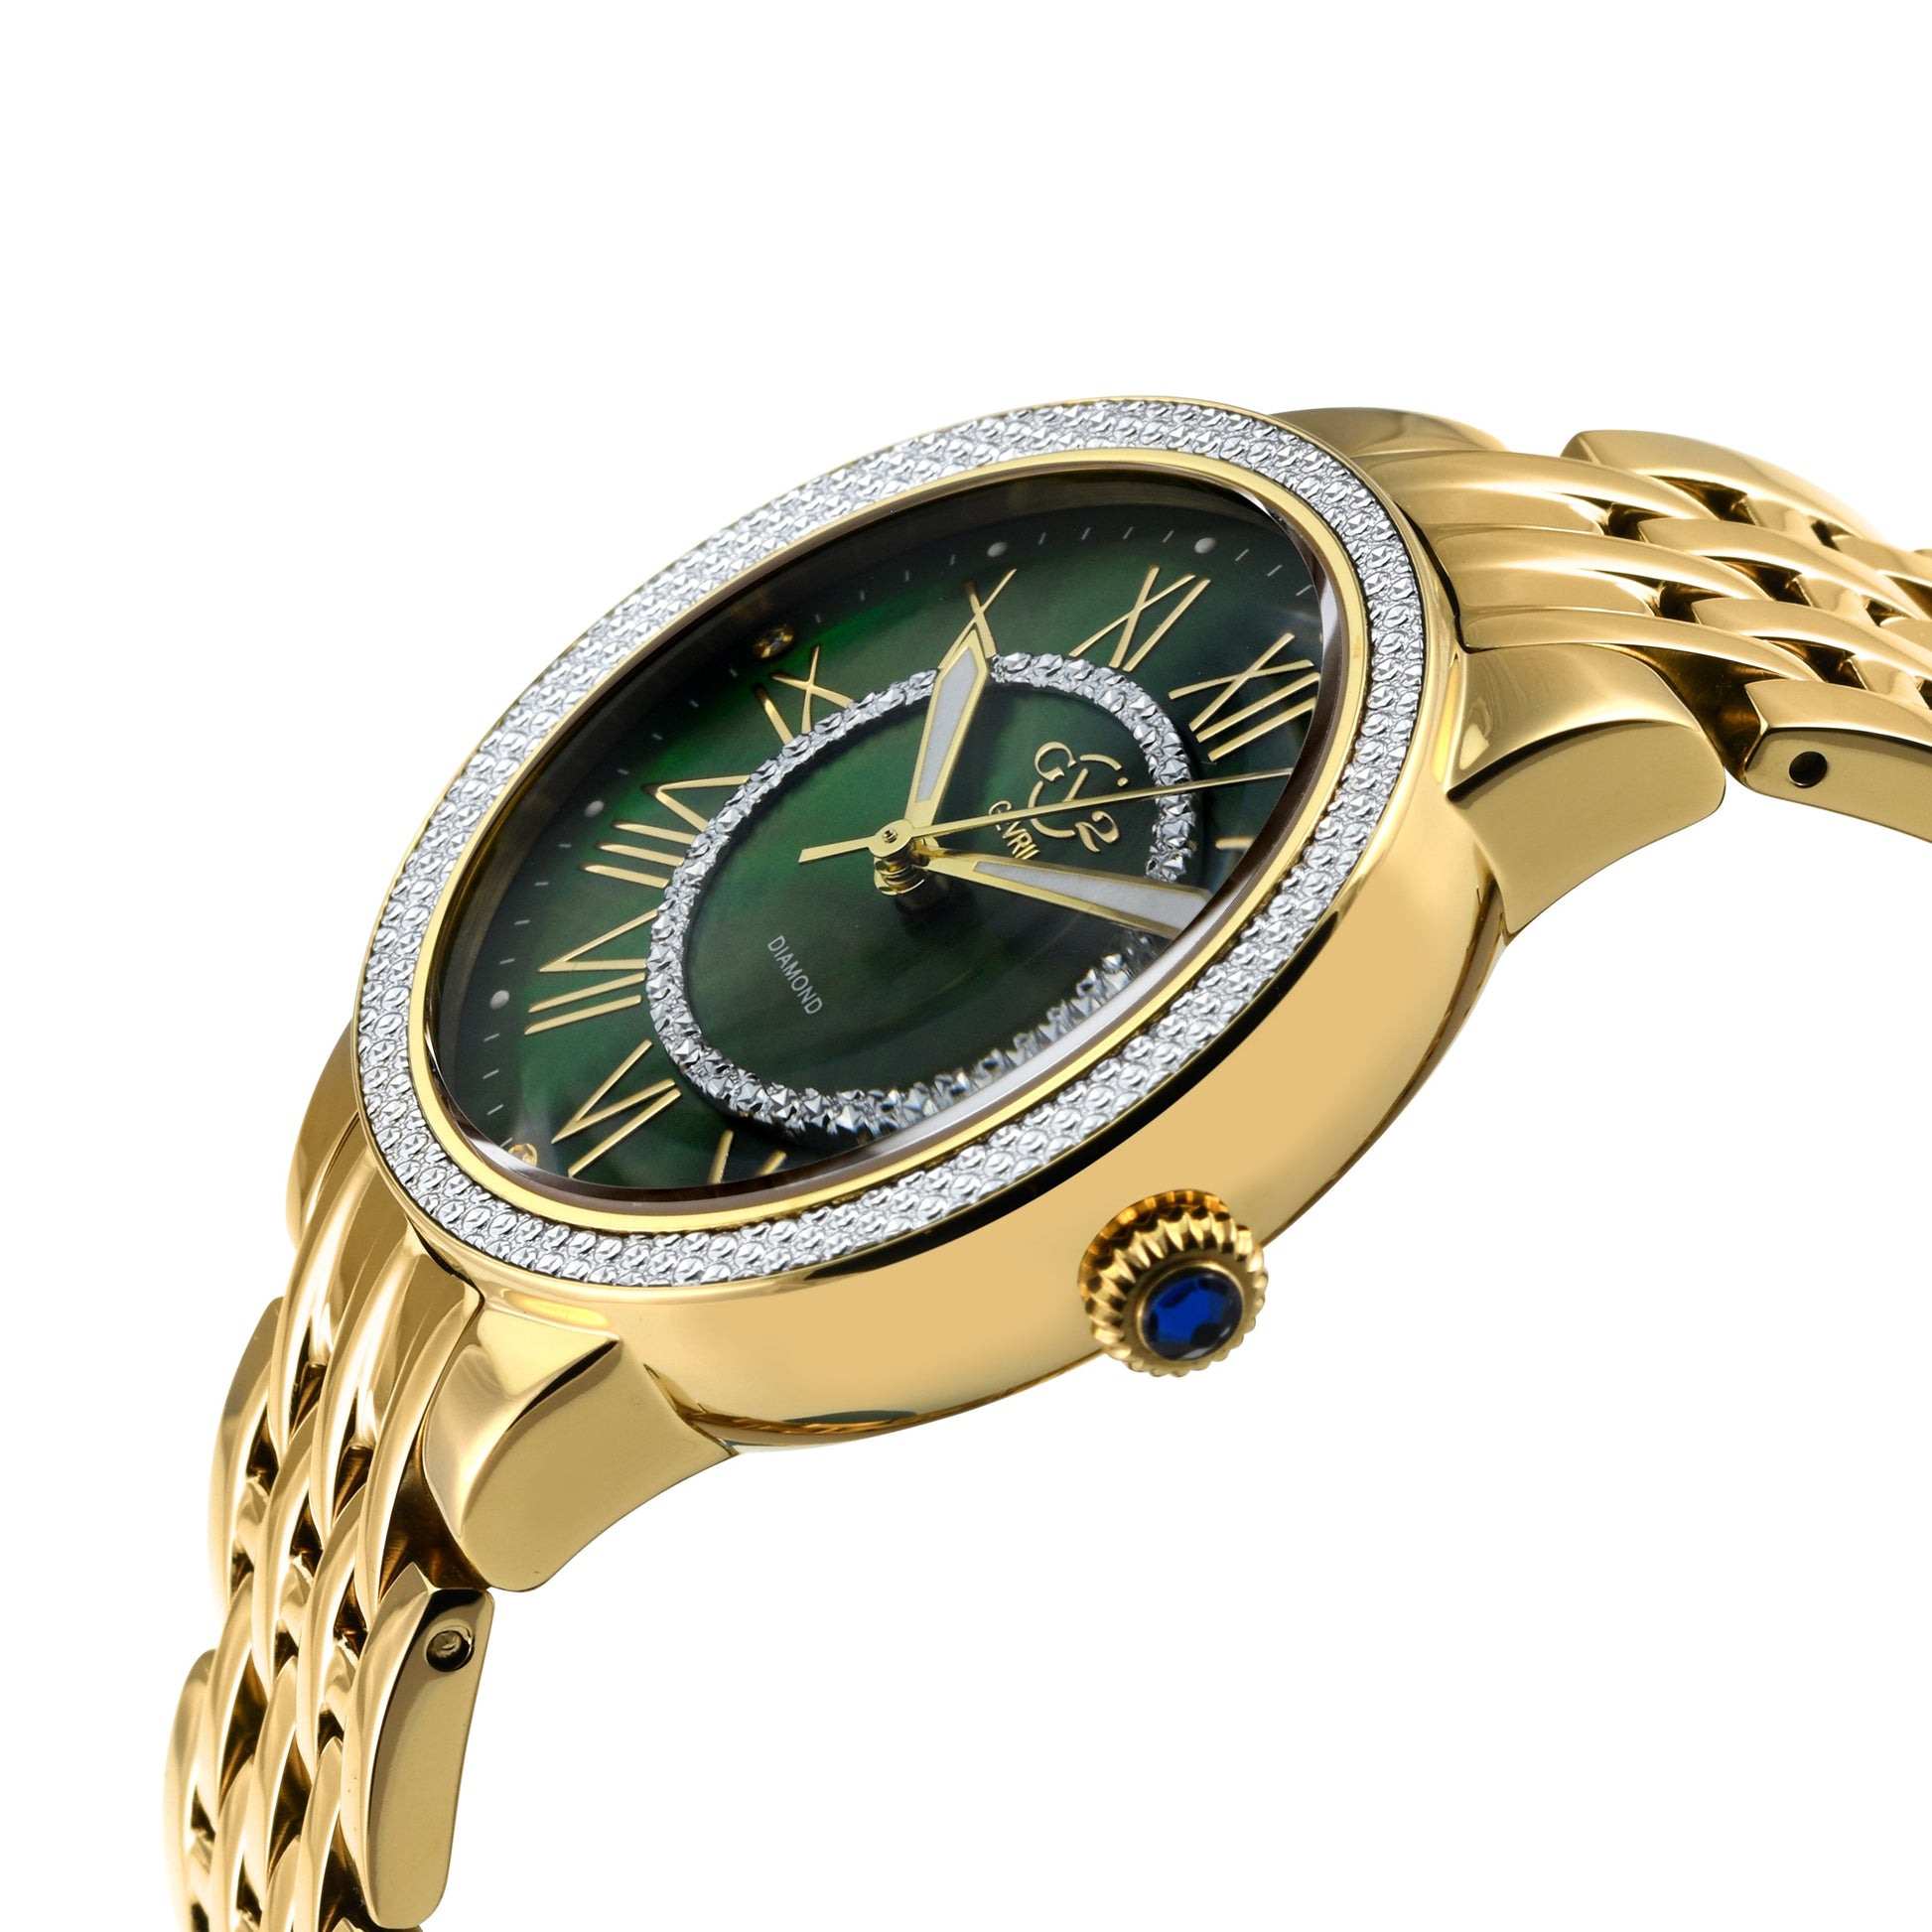 Gevril-Luxury-Swiss-Watches-GV2 Astor II Diamond-9144